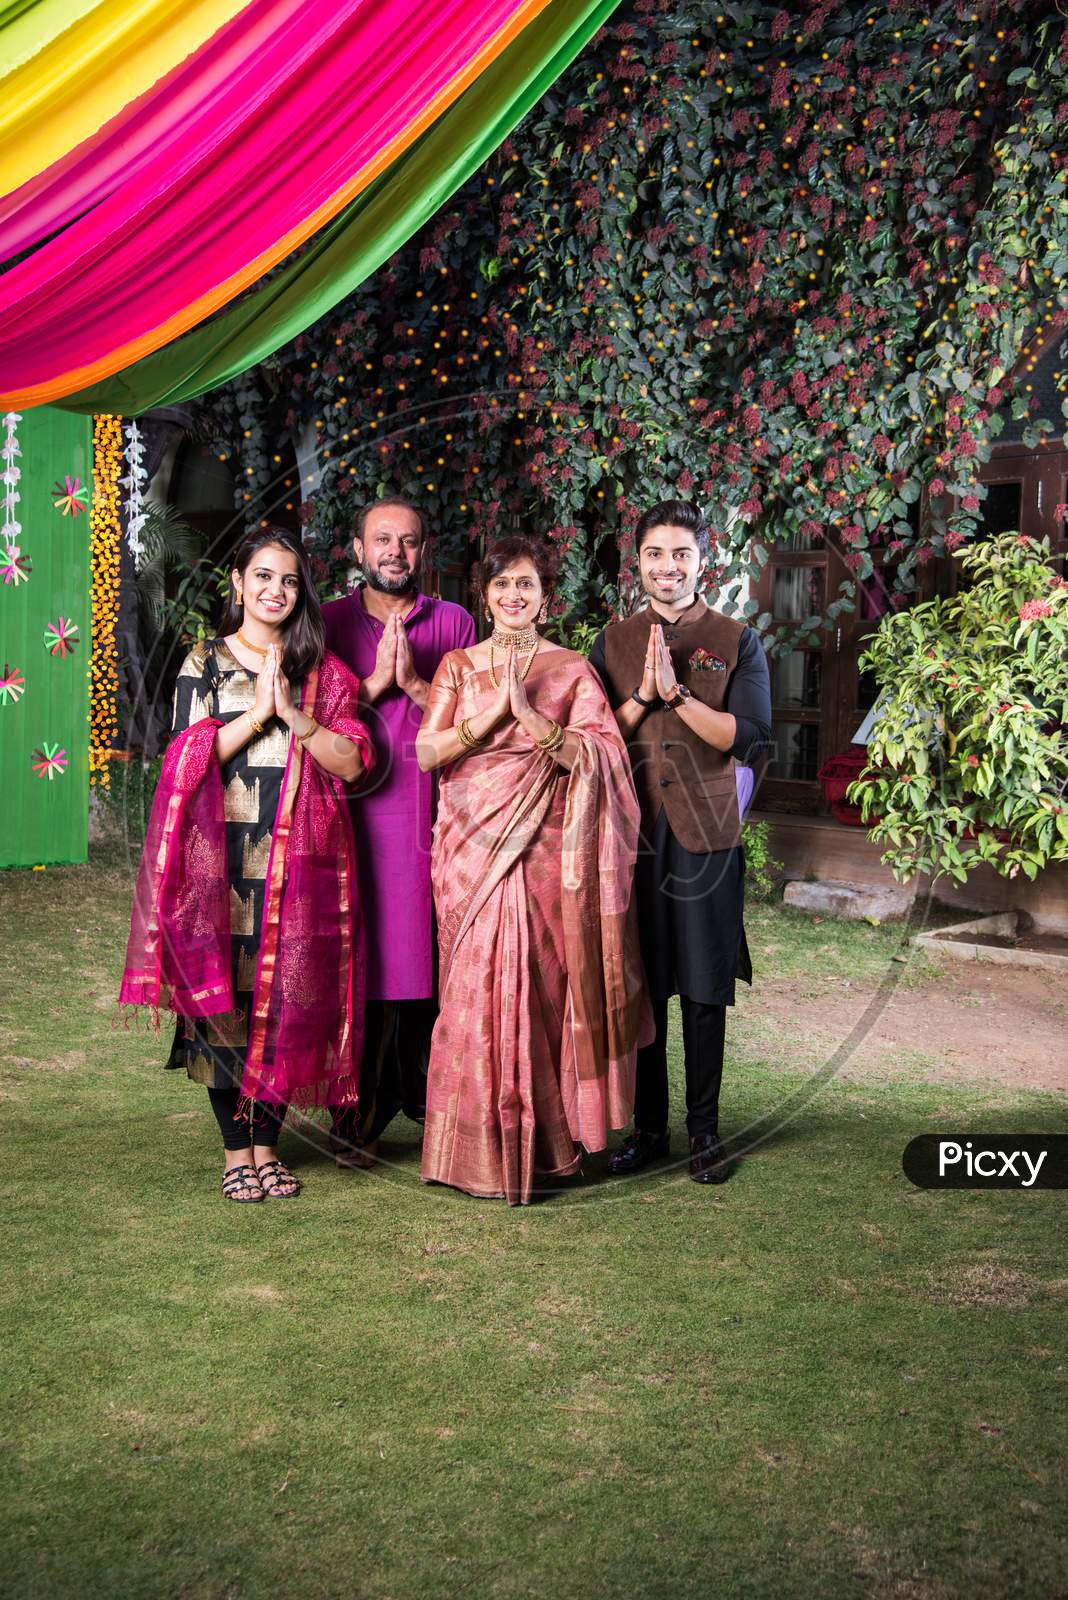 Family welcoming guests or in namaste / namaskara pose while looking at camera in celebration mood